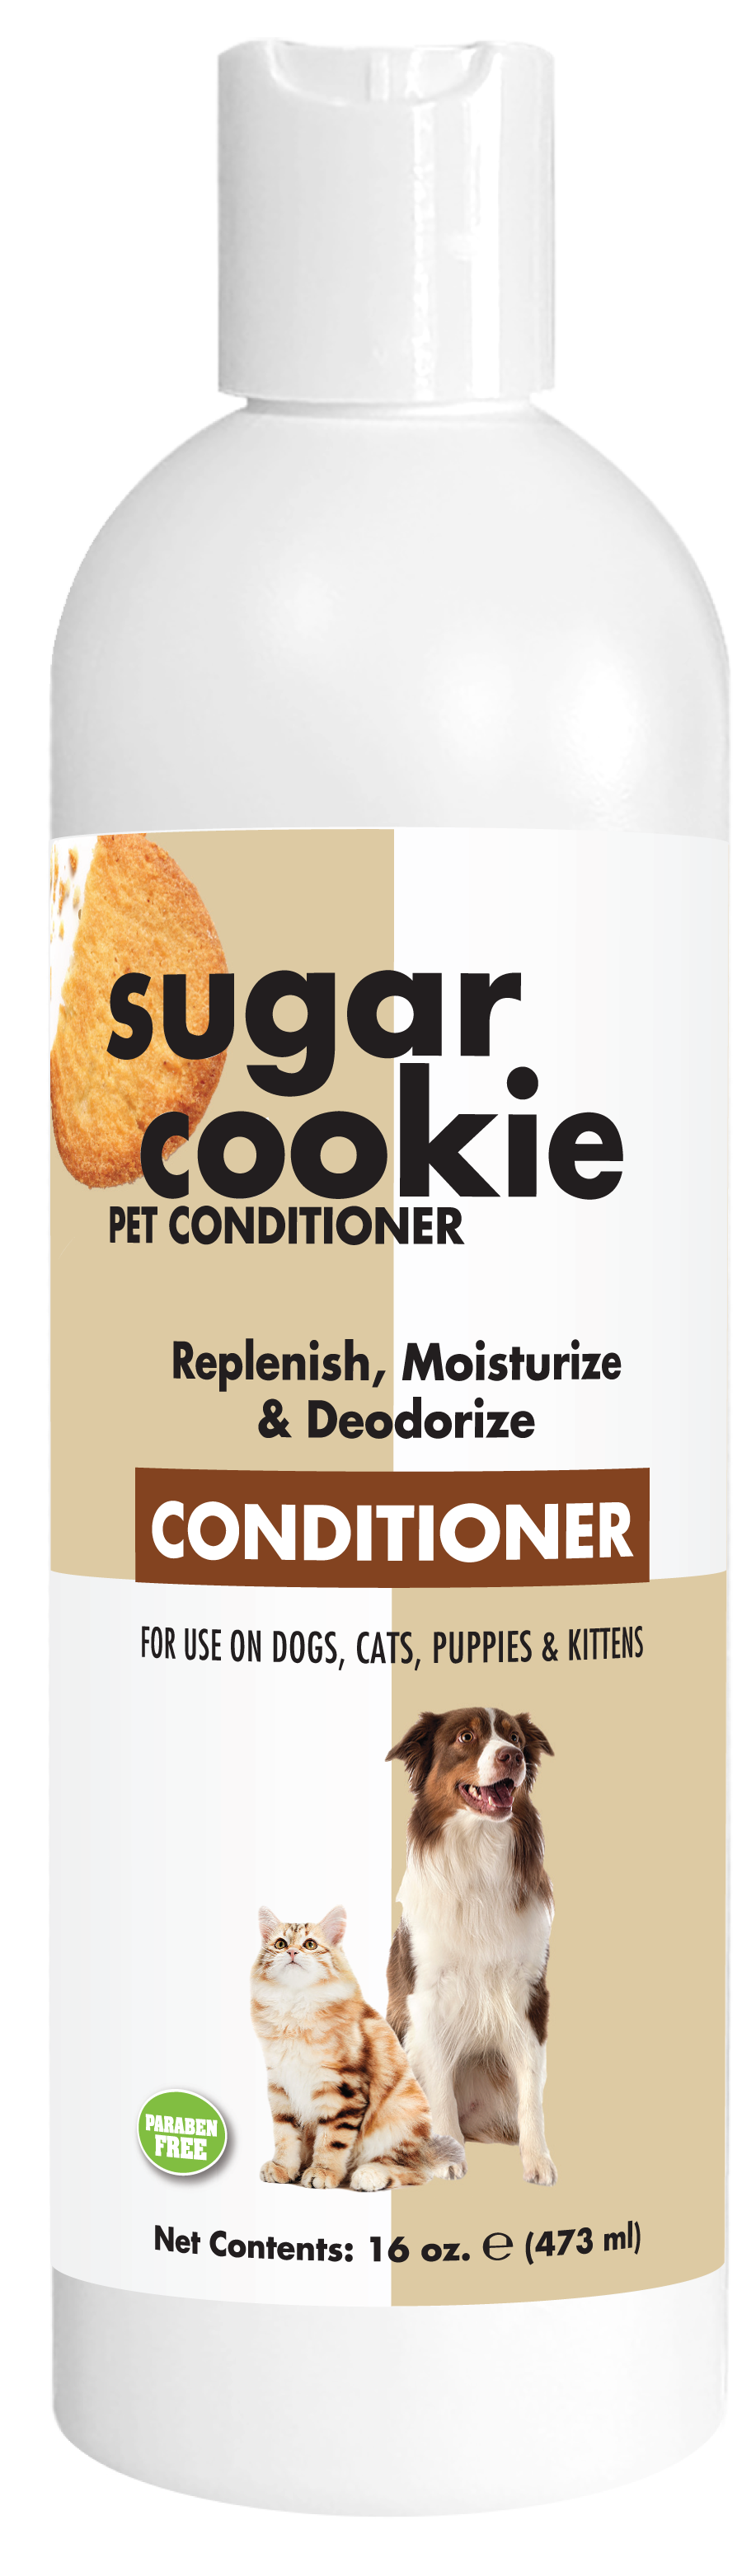 Sugar Cookie Pet Conditioner